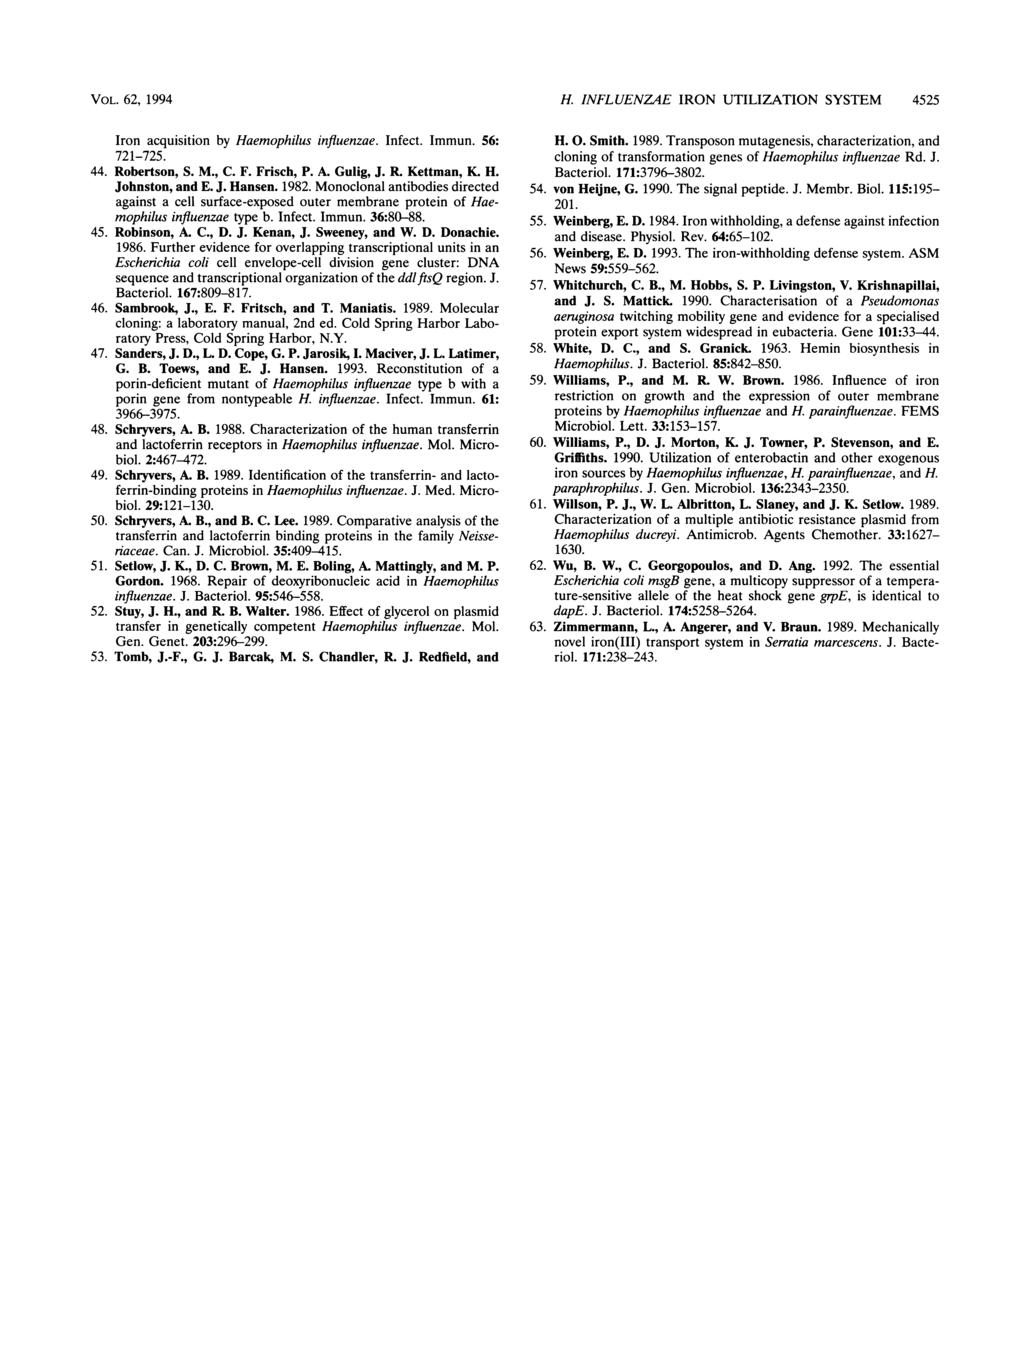 VOL. 62, 1994 Iron acquisition by Haemophilus influenzae. Infect. Immun. 56: 721-725. 44. Robertson, S. M., C. F. Frisch, P. A. Gulig, J. R. Kettman, K. H. Johnston, and E. J. Hansen. 1982.